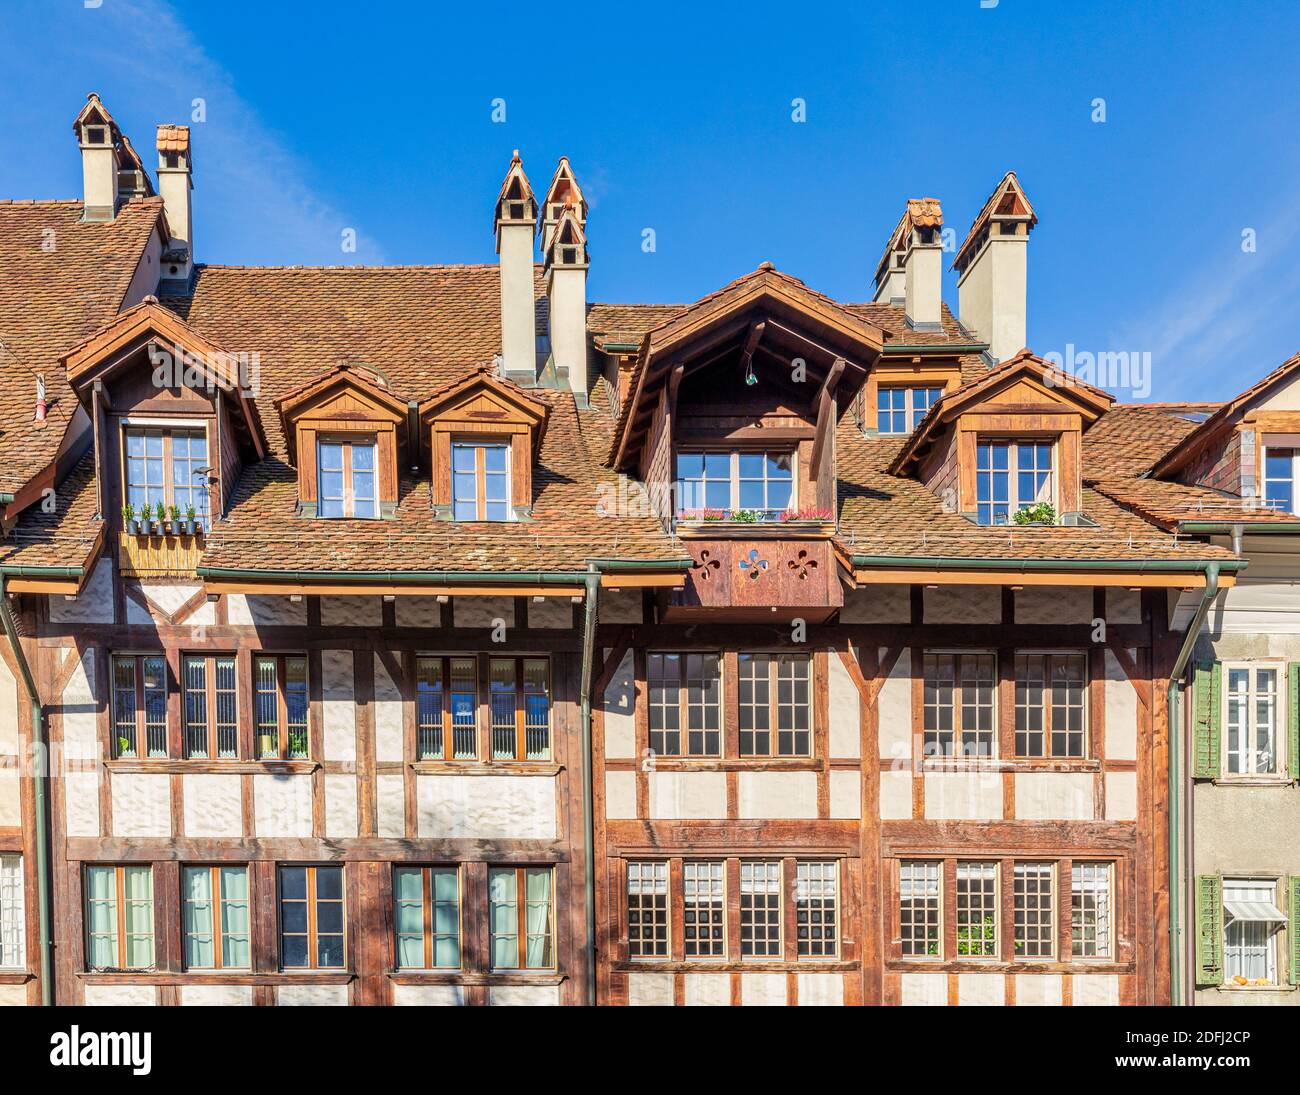 Old town house, Bern, Switzerland Stock Photo